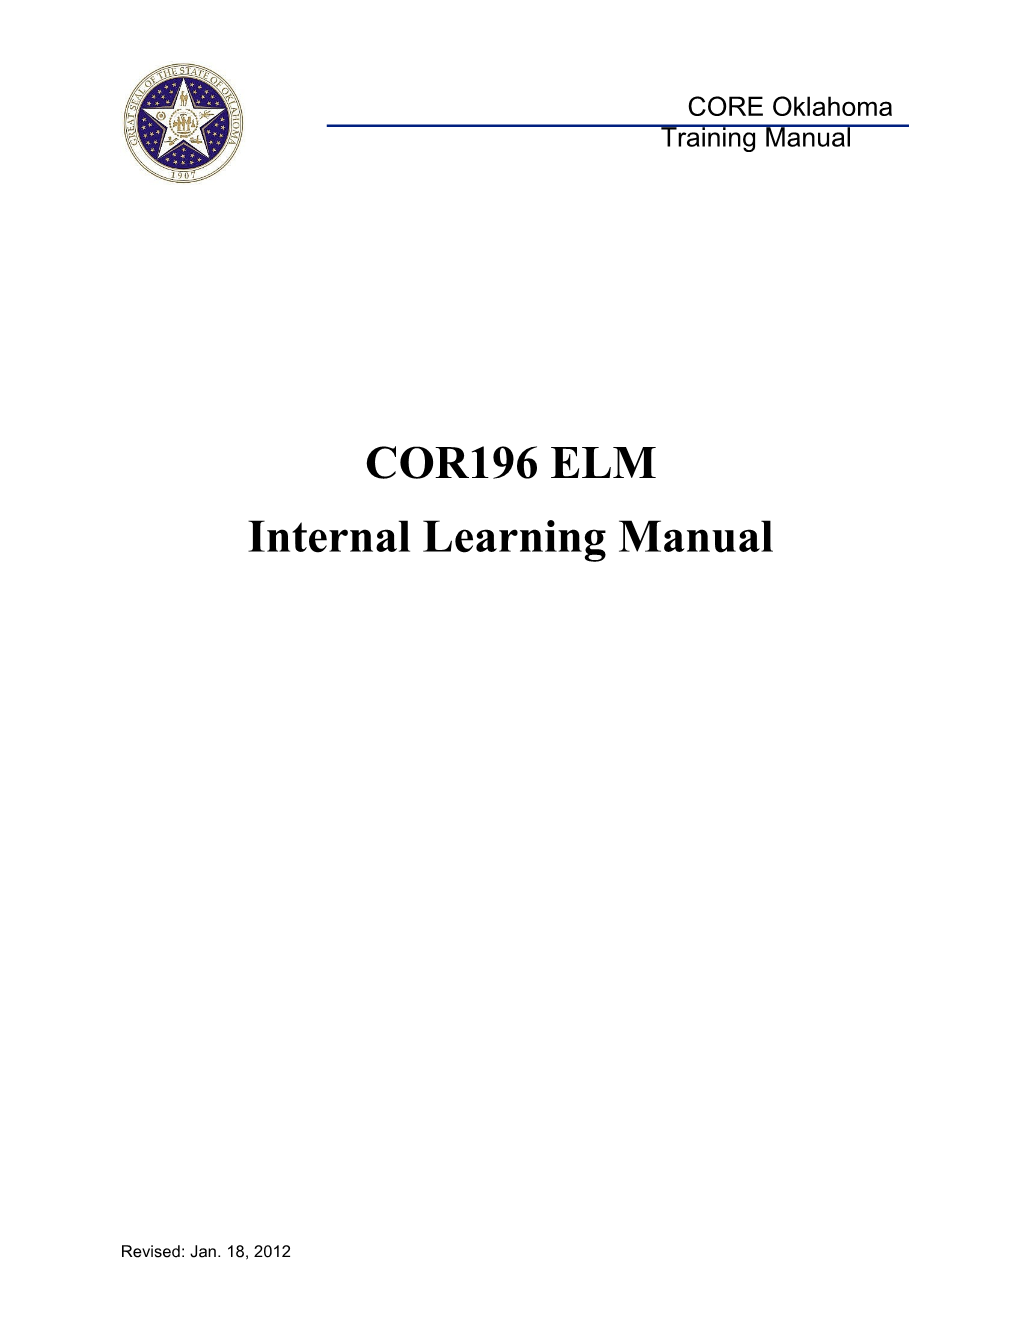 COR196 ELM Internal Learning Manual s1